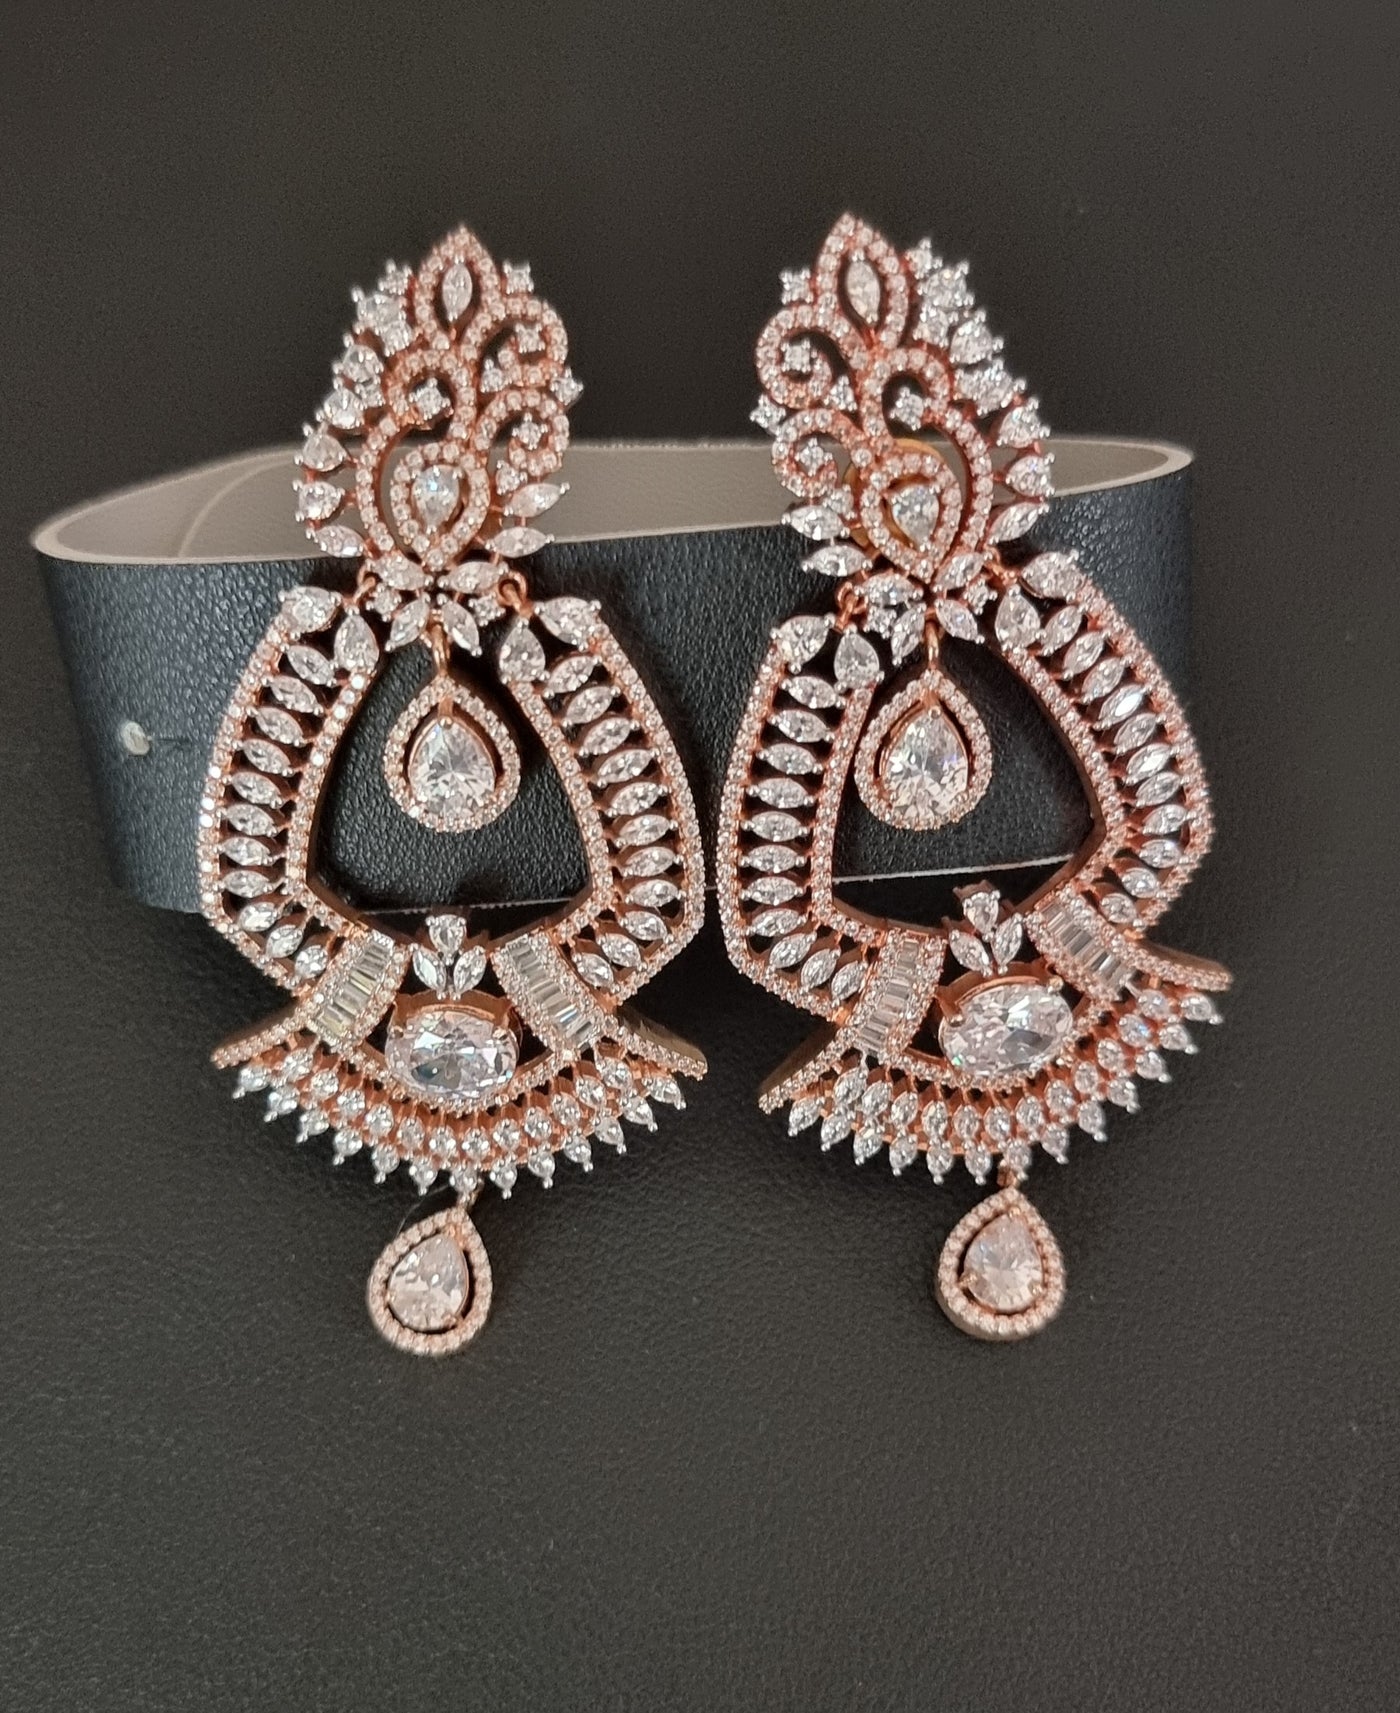 American Diamond (CZ) earrings (BHUADE1)